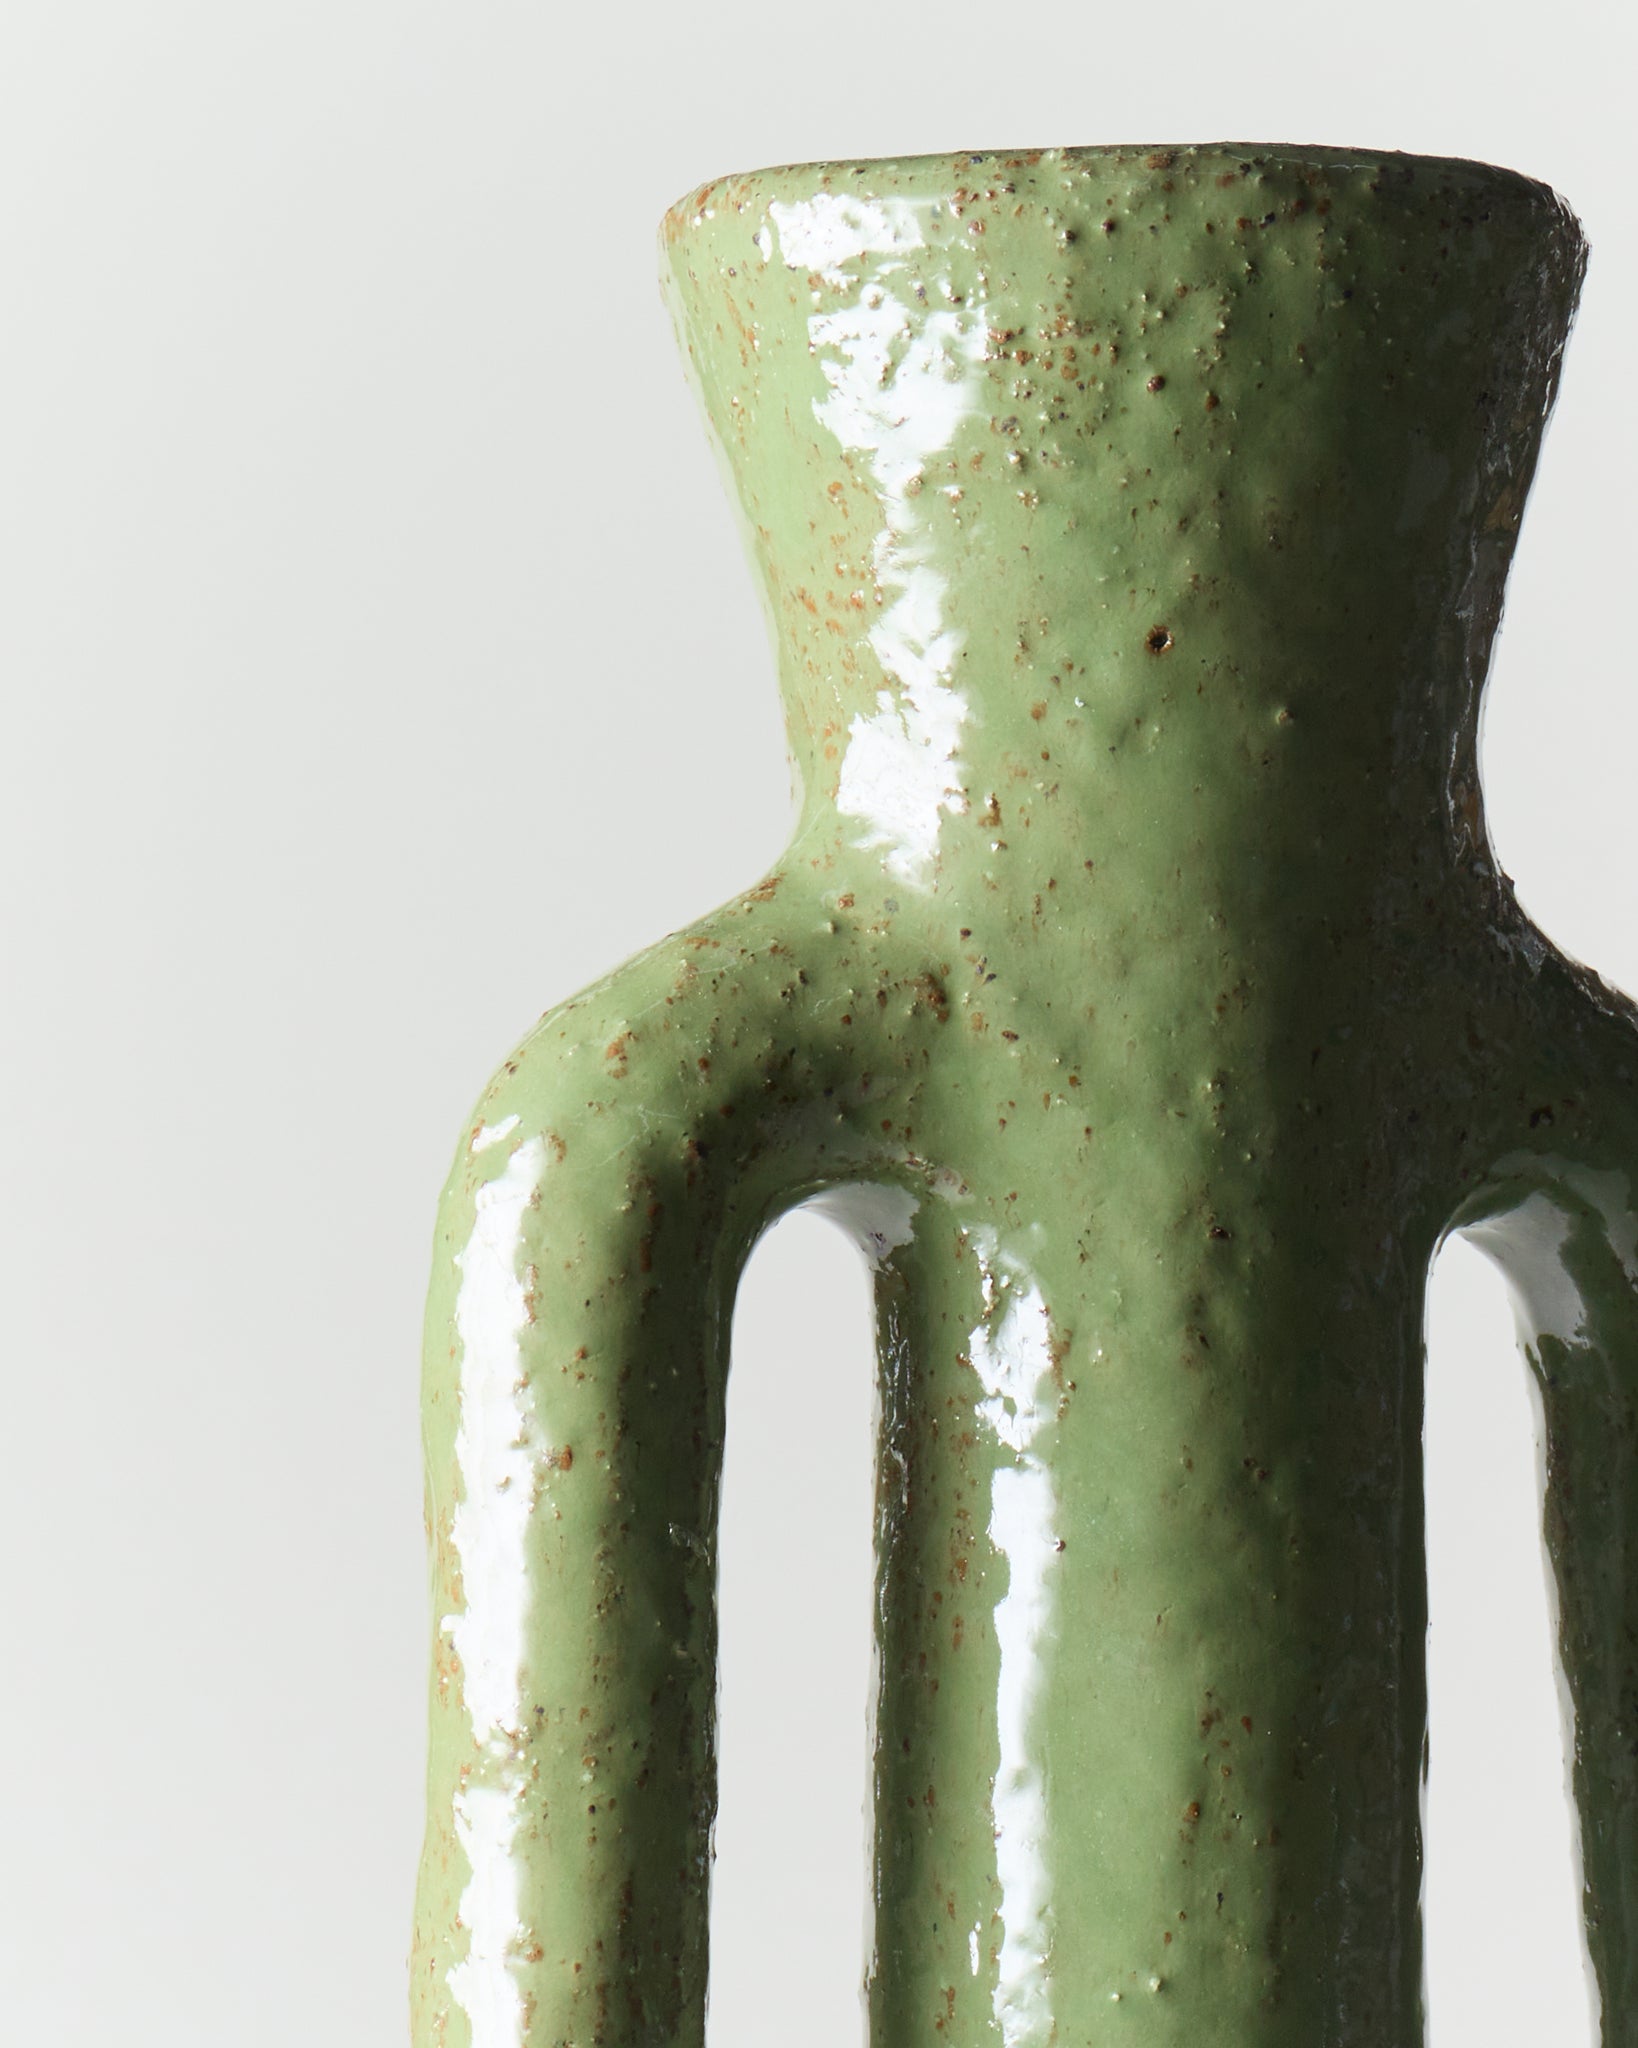 Textured Moss Tall Handled Vase